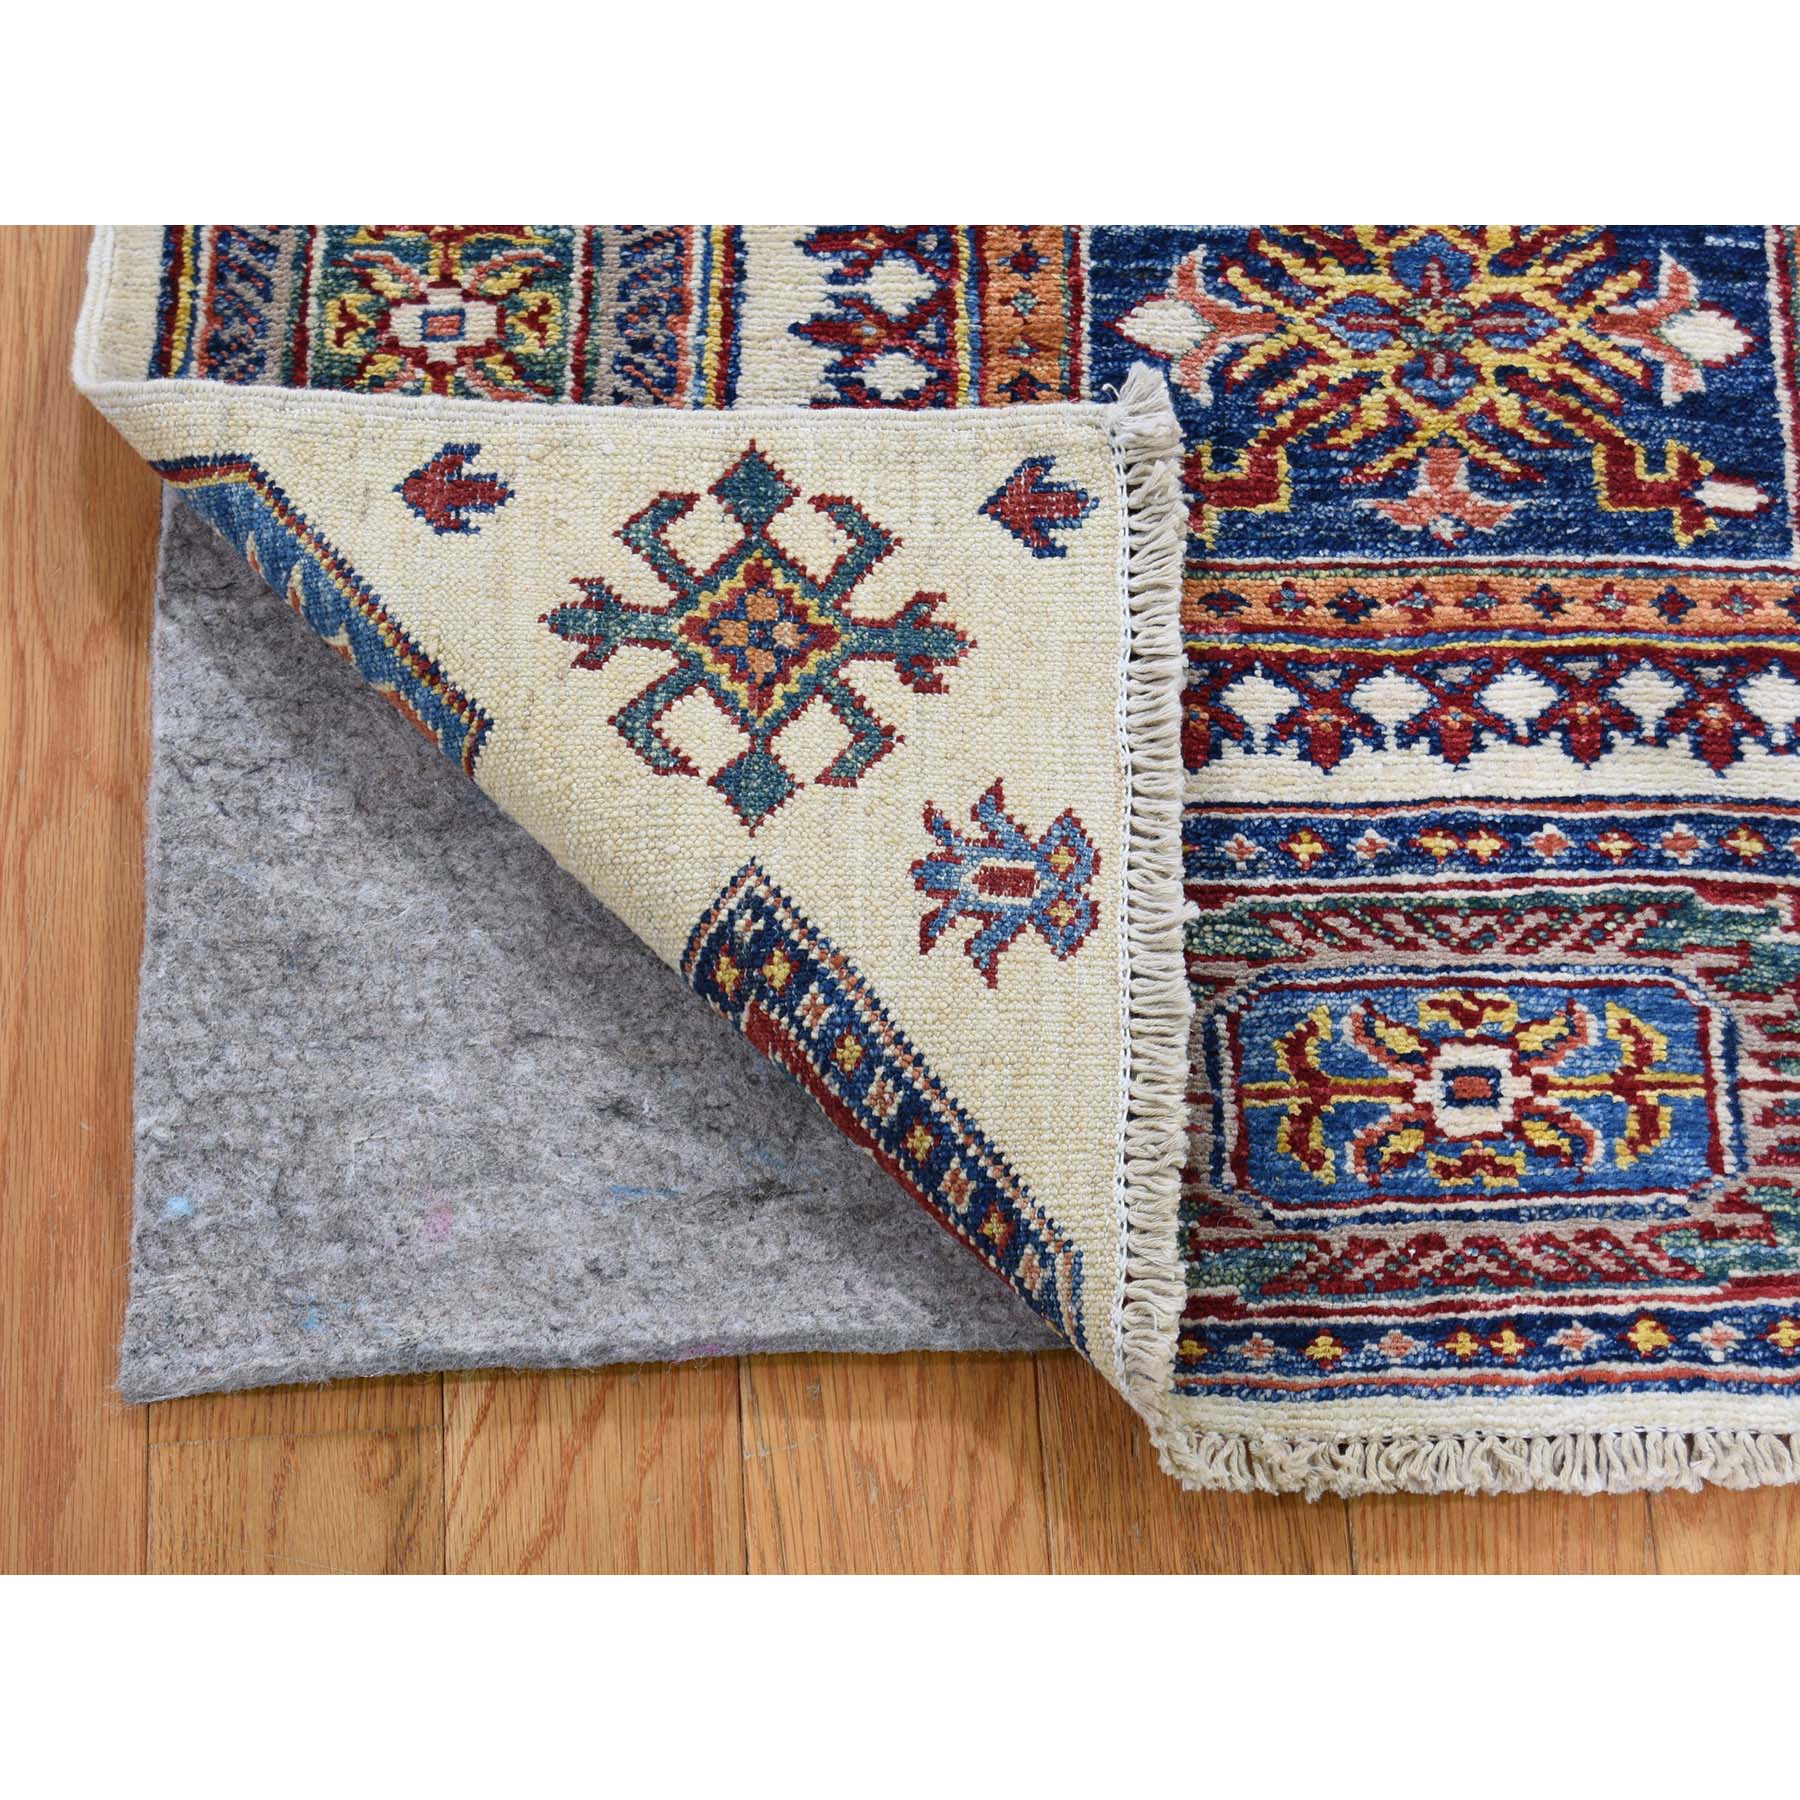 2-9 x4- Ivory Super Kazak Oriental Pure Wool Hand-Knotted Oriental Rug 